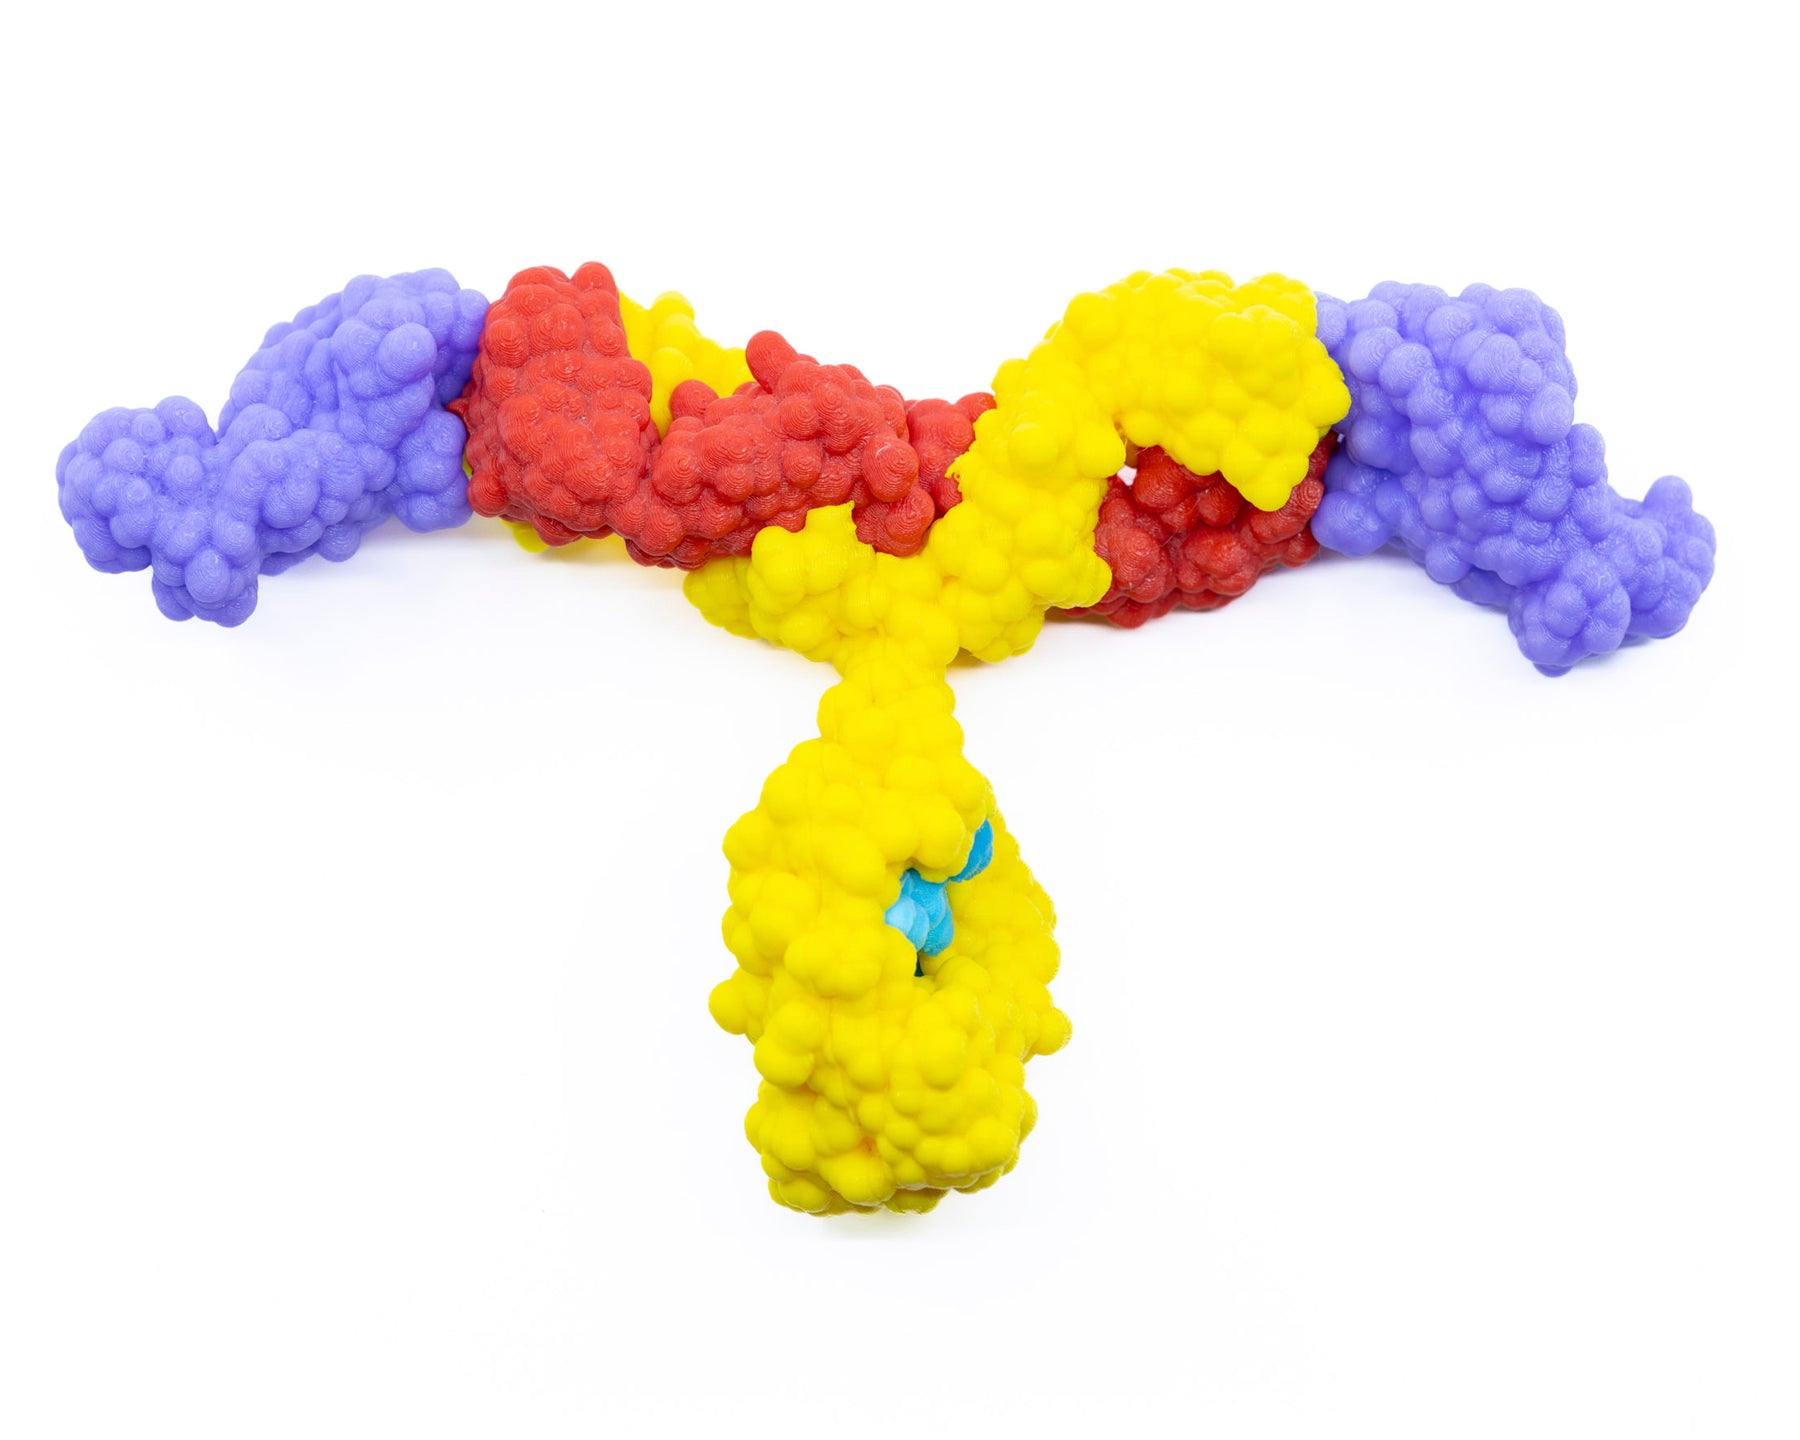 Antibody and Antigen Models©